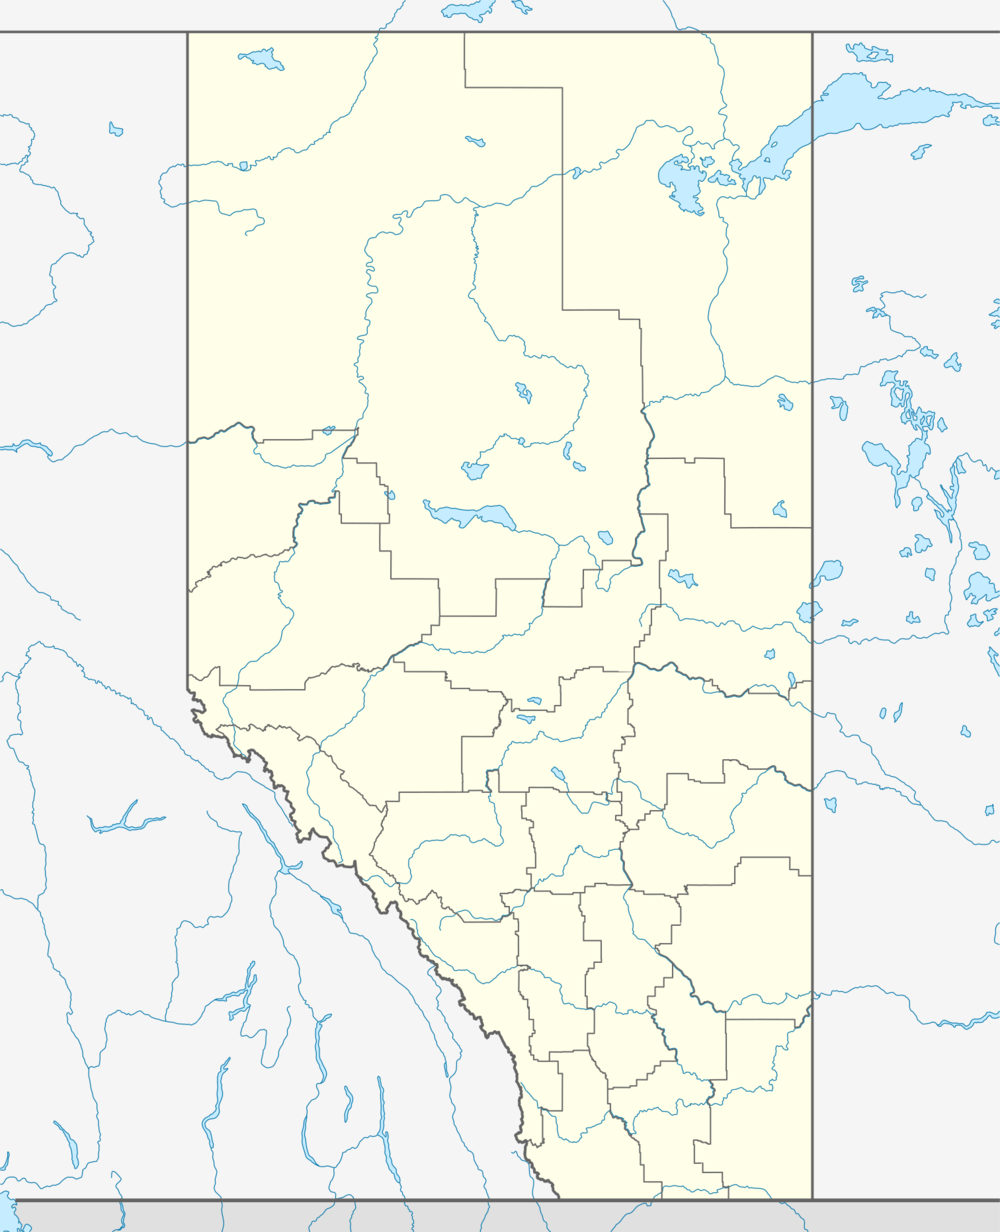 Drumheller, AB (CAN) (Alberta)